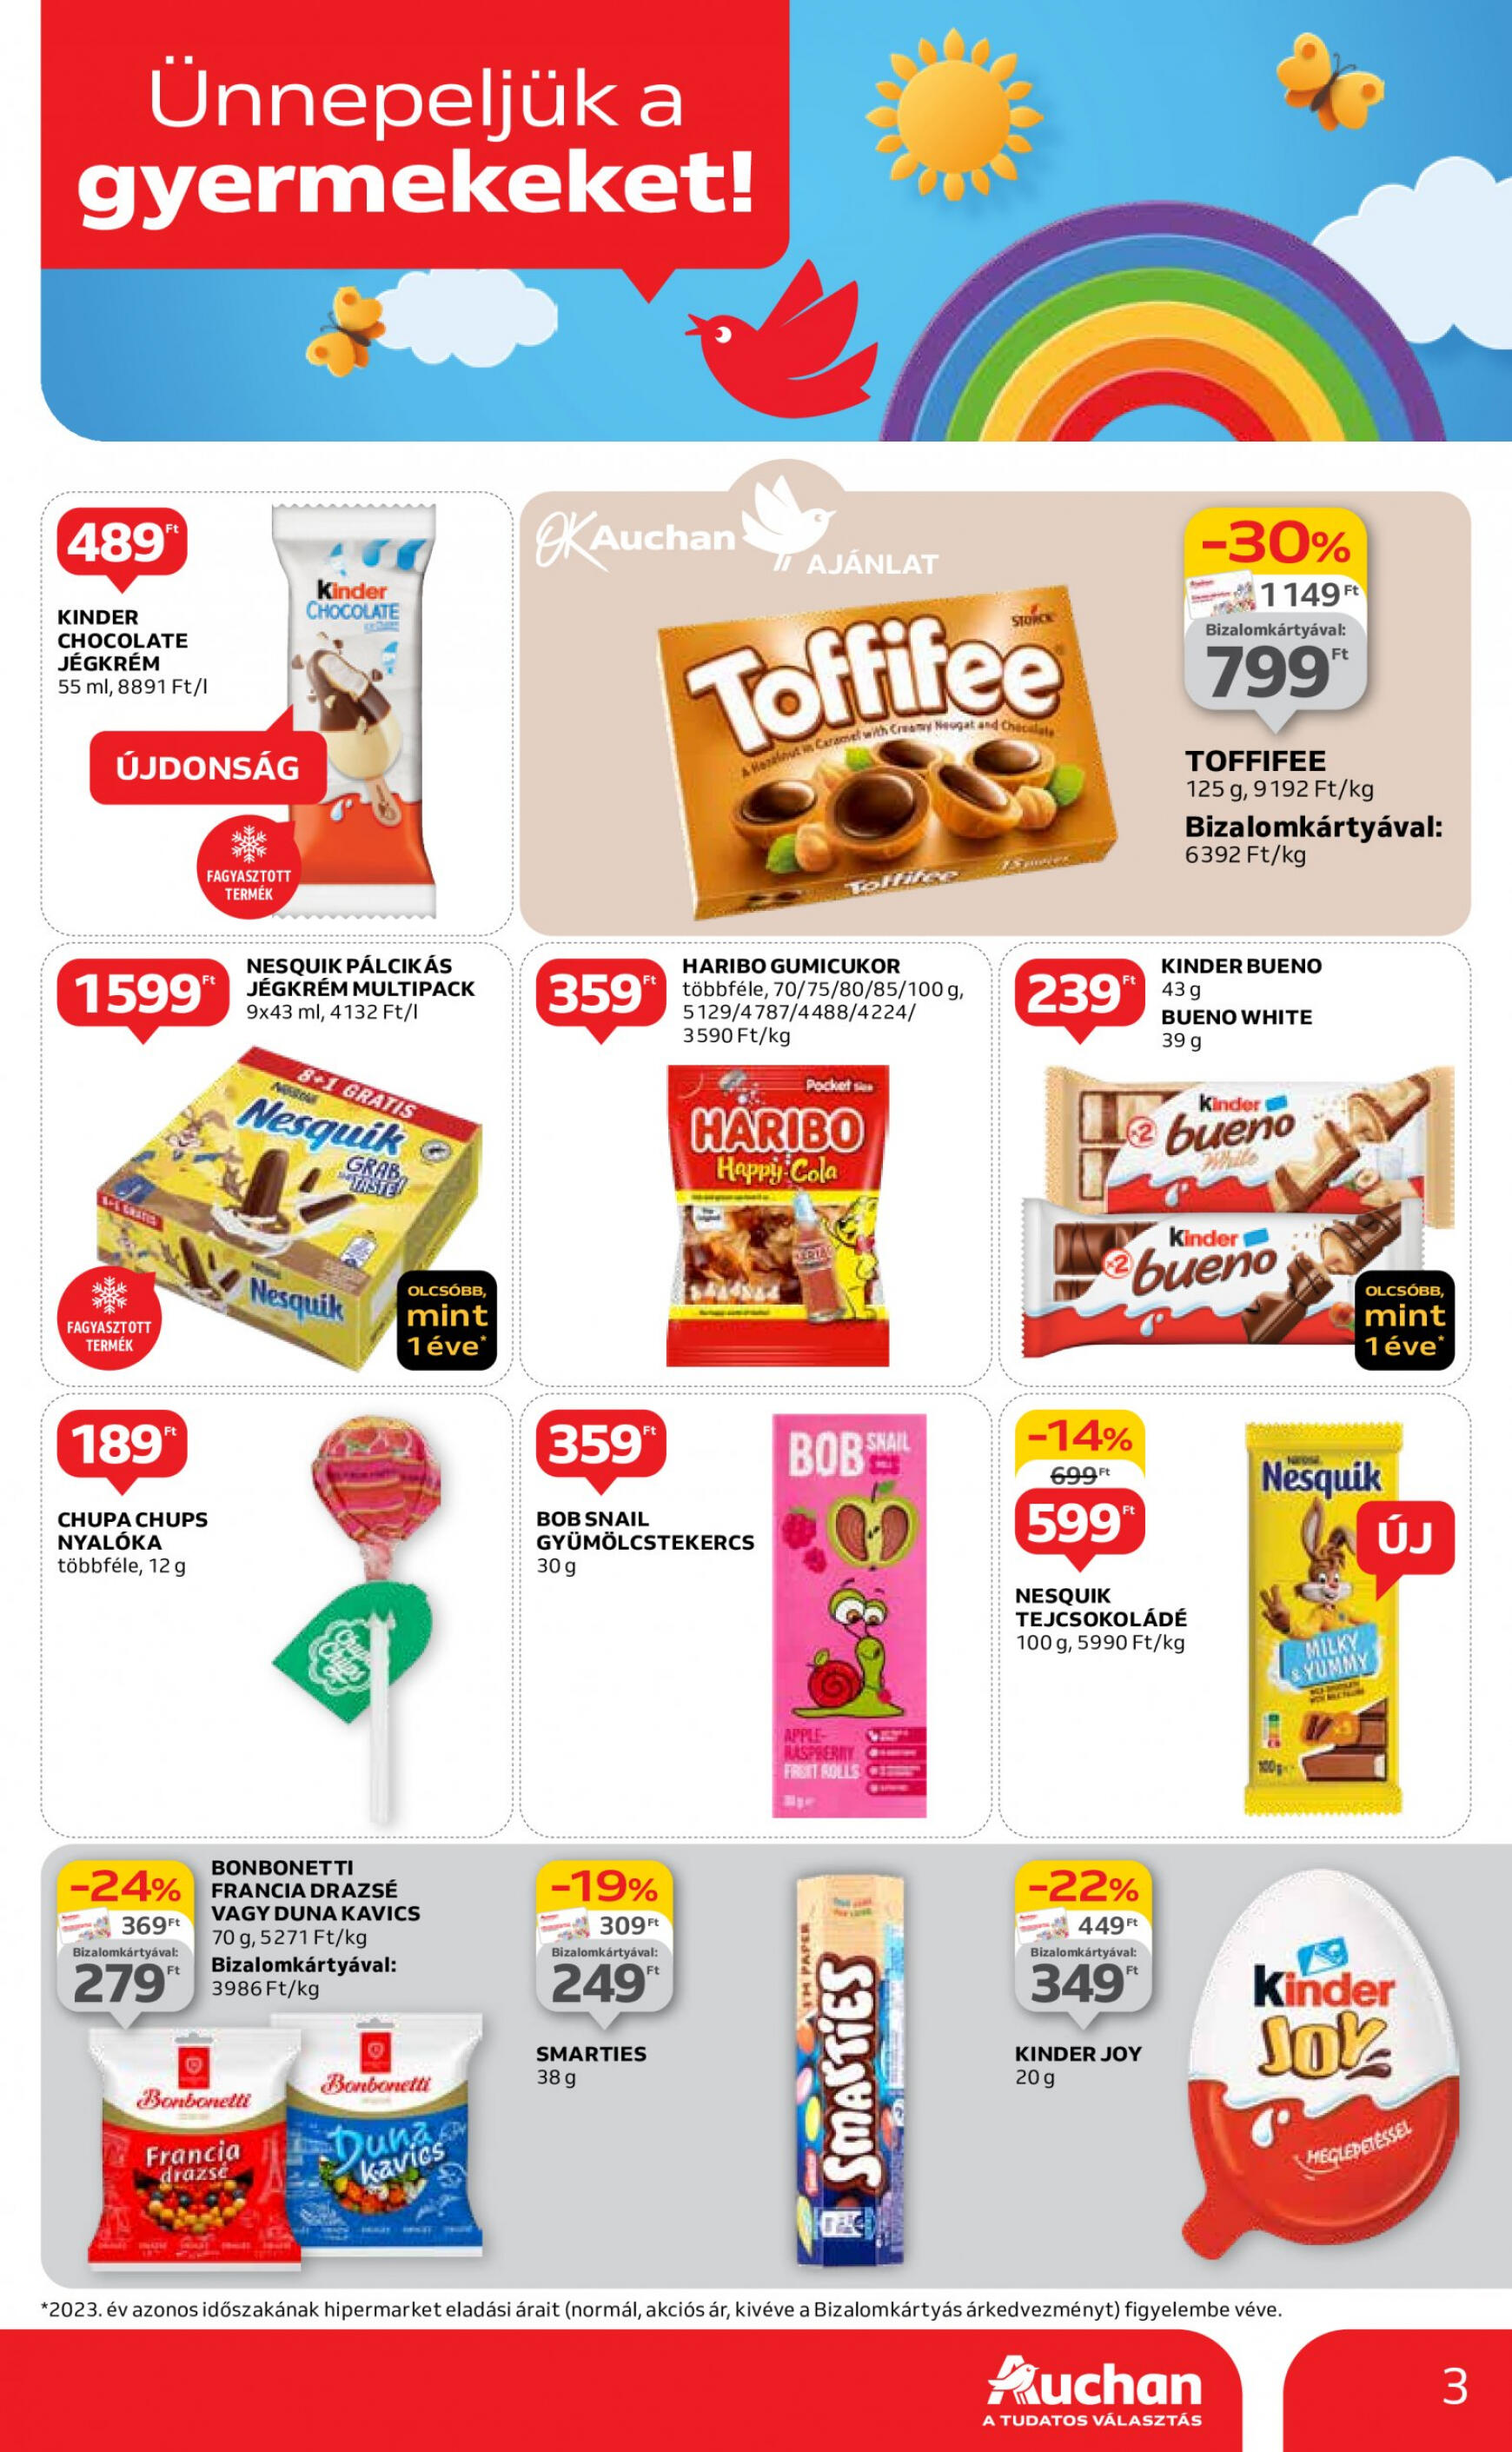 auchan - Aktuális újság Auchan 05.16. - 05.29. - page: 3